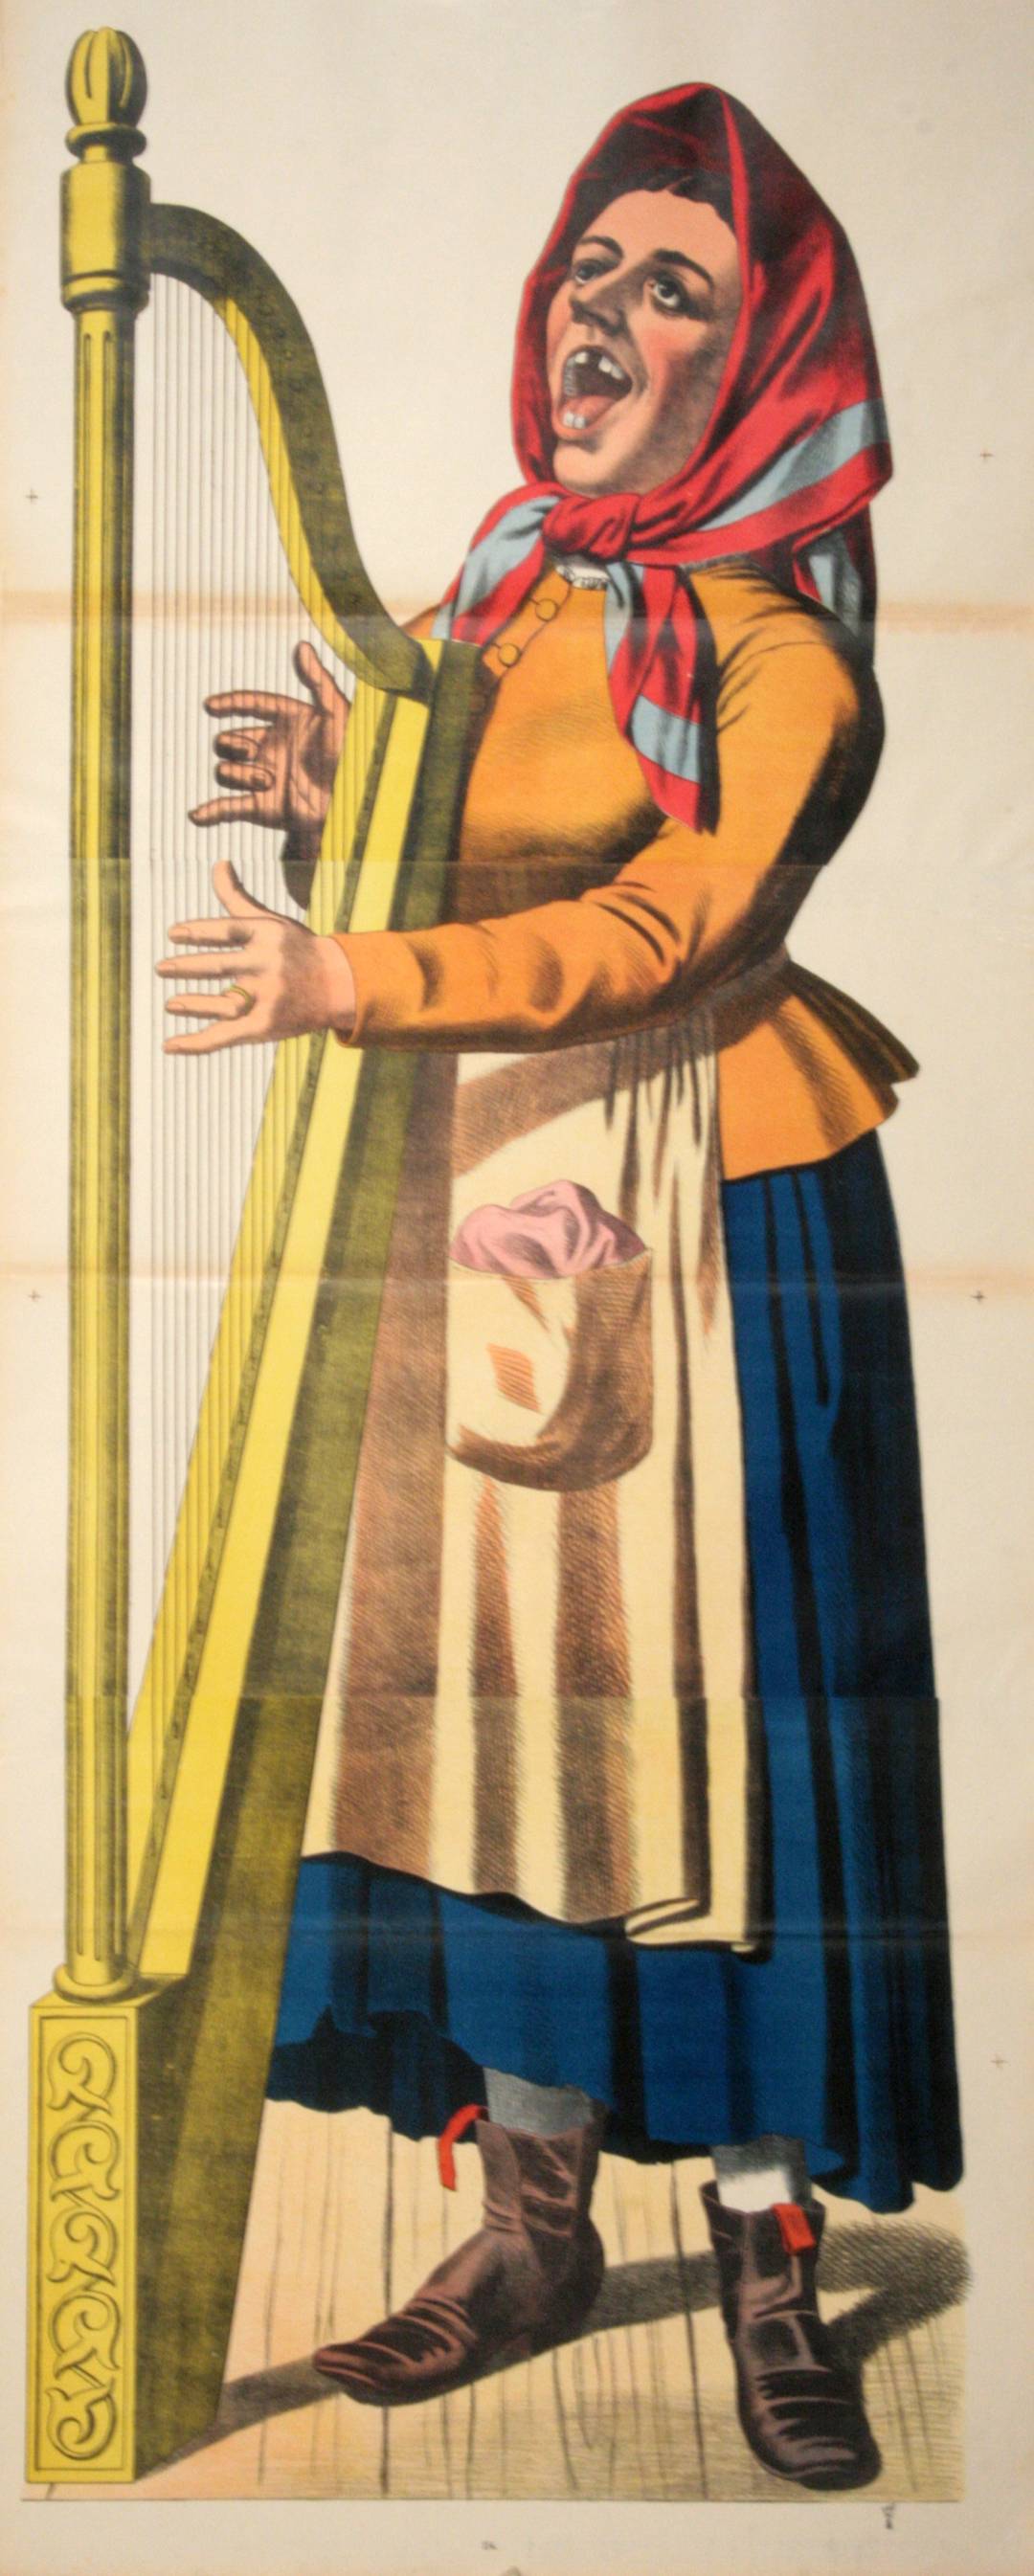 Original C1880 Vintage Poster - Female Harpist 154  - Wissembourg Collection P